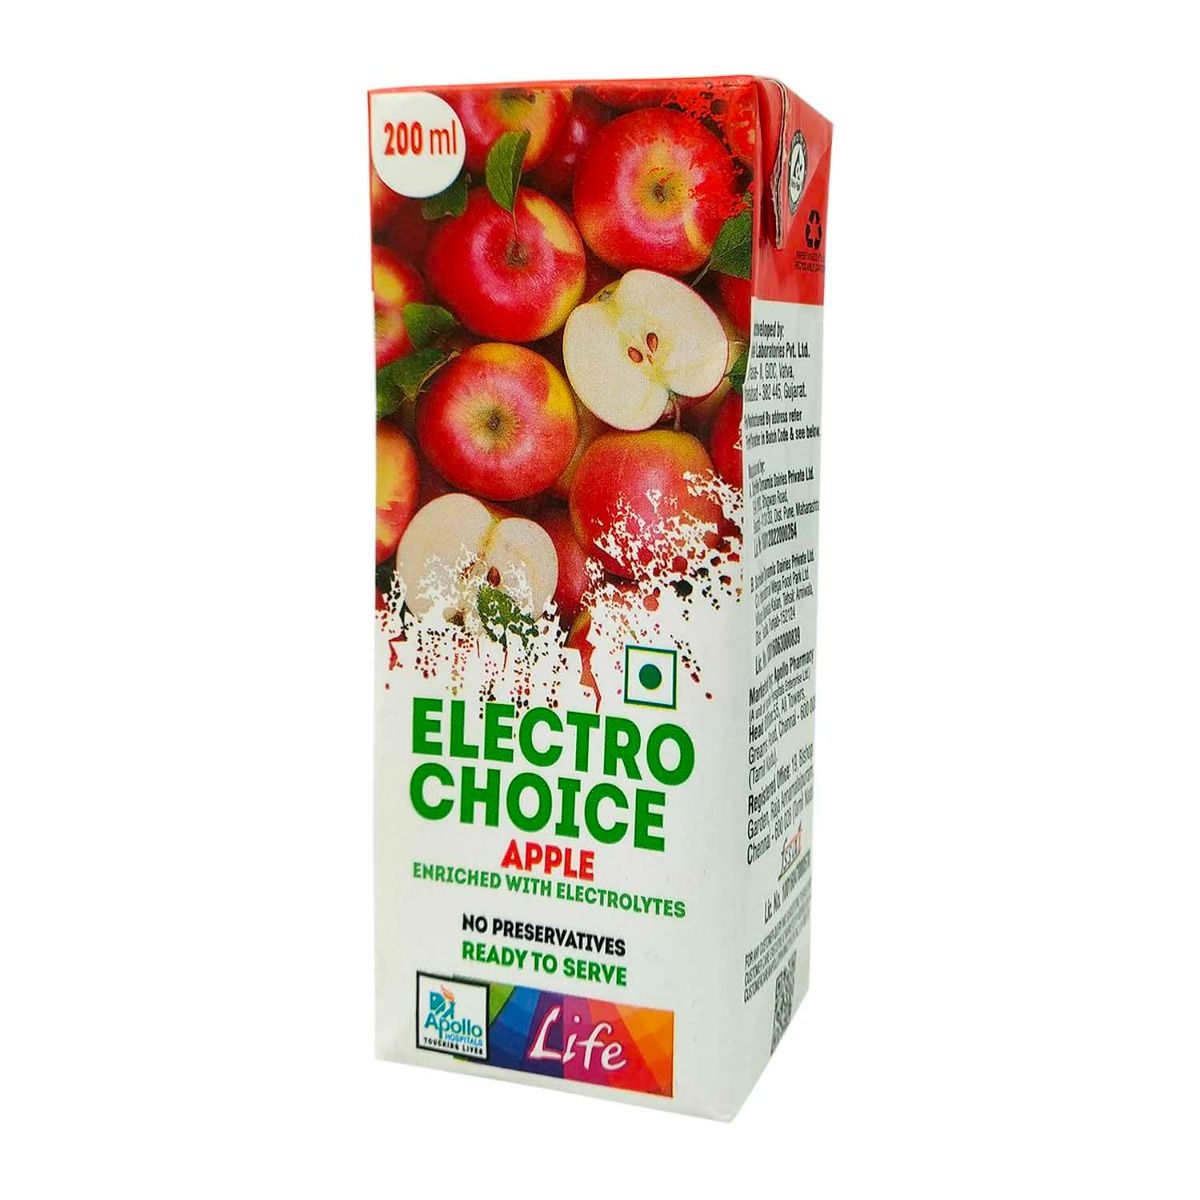 Apollo Life Apple Flavour Electro Choice, 200 ml, Pack of 1 